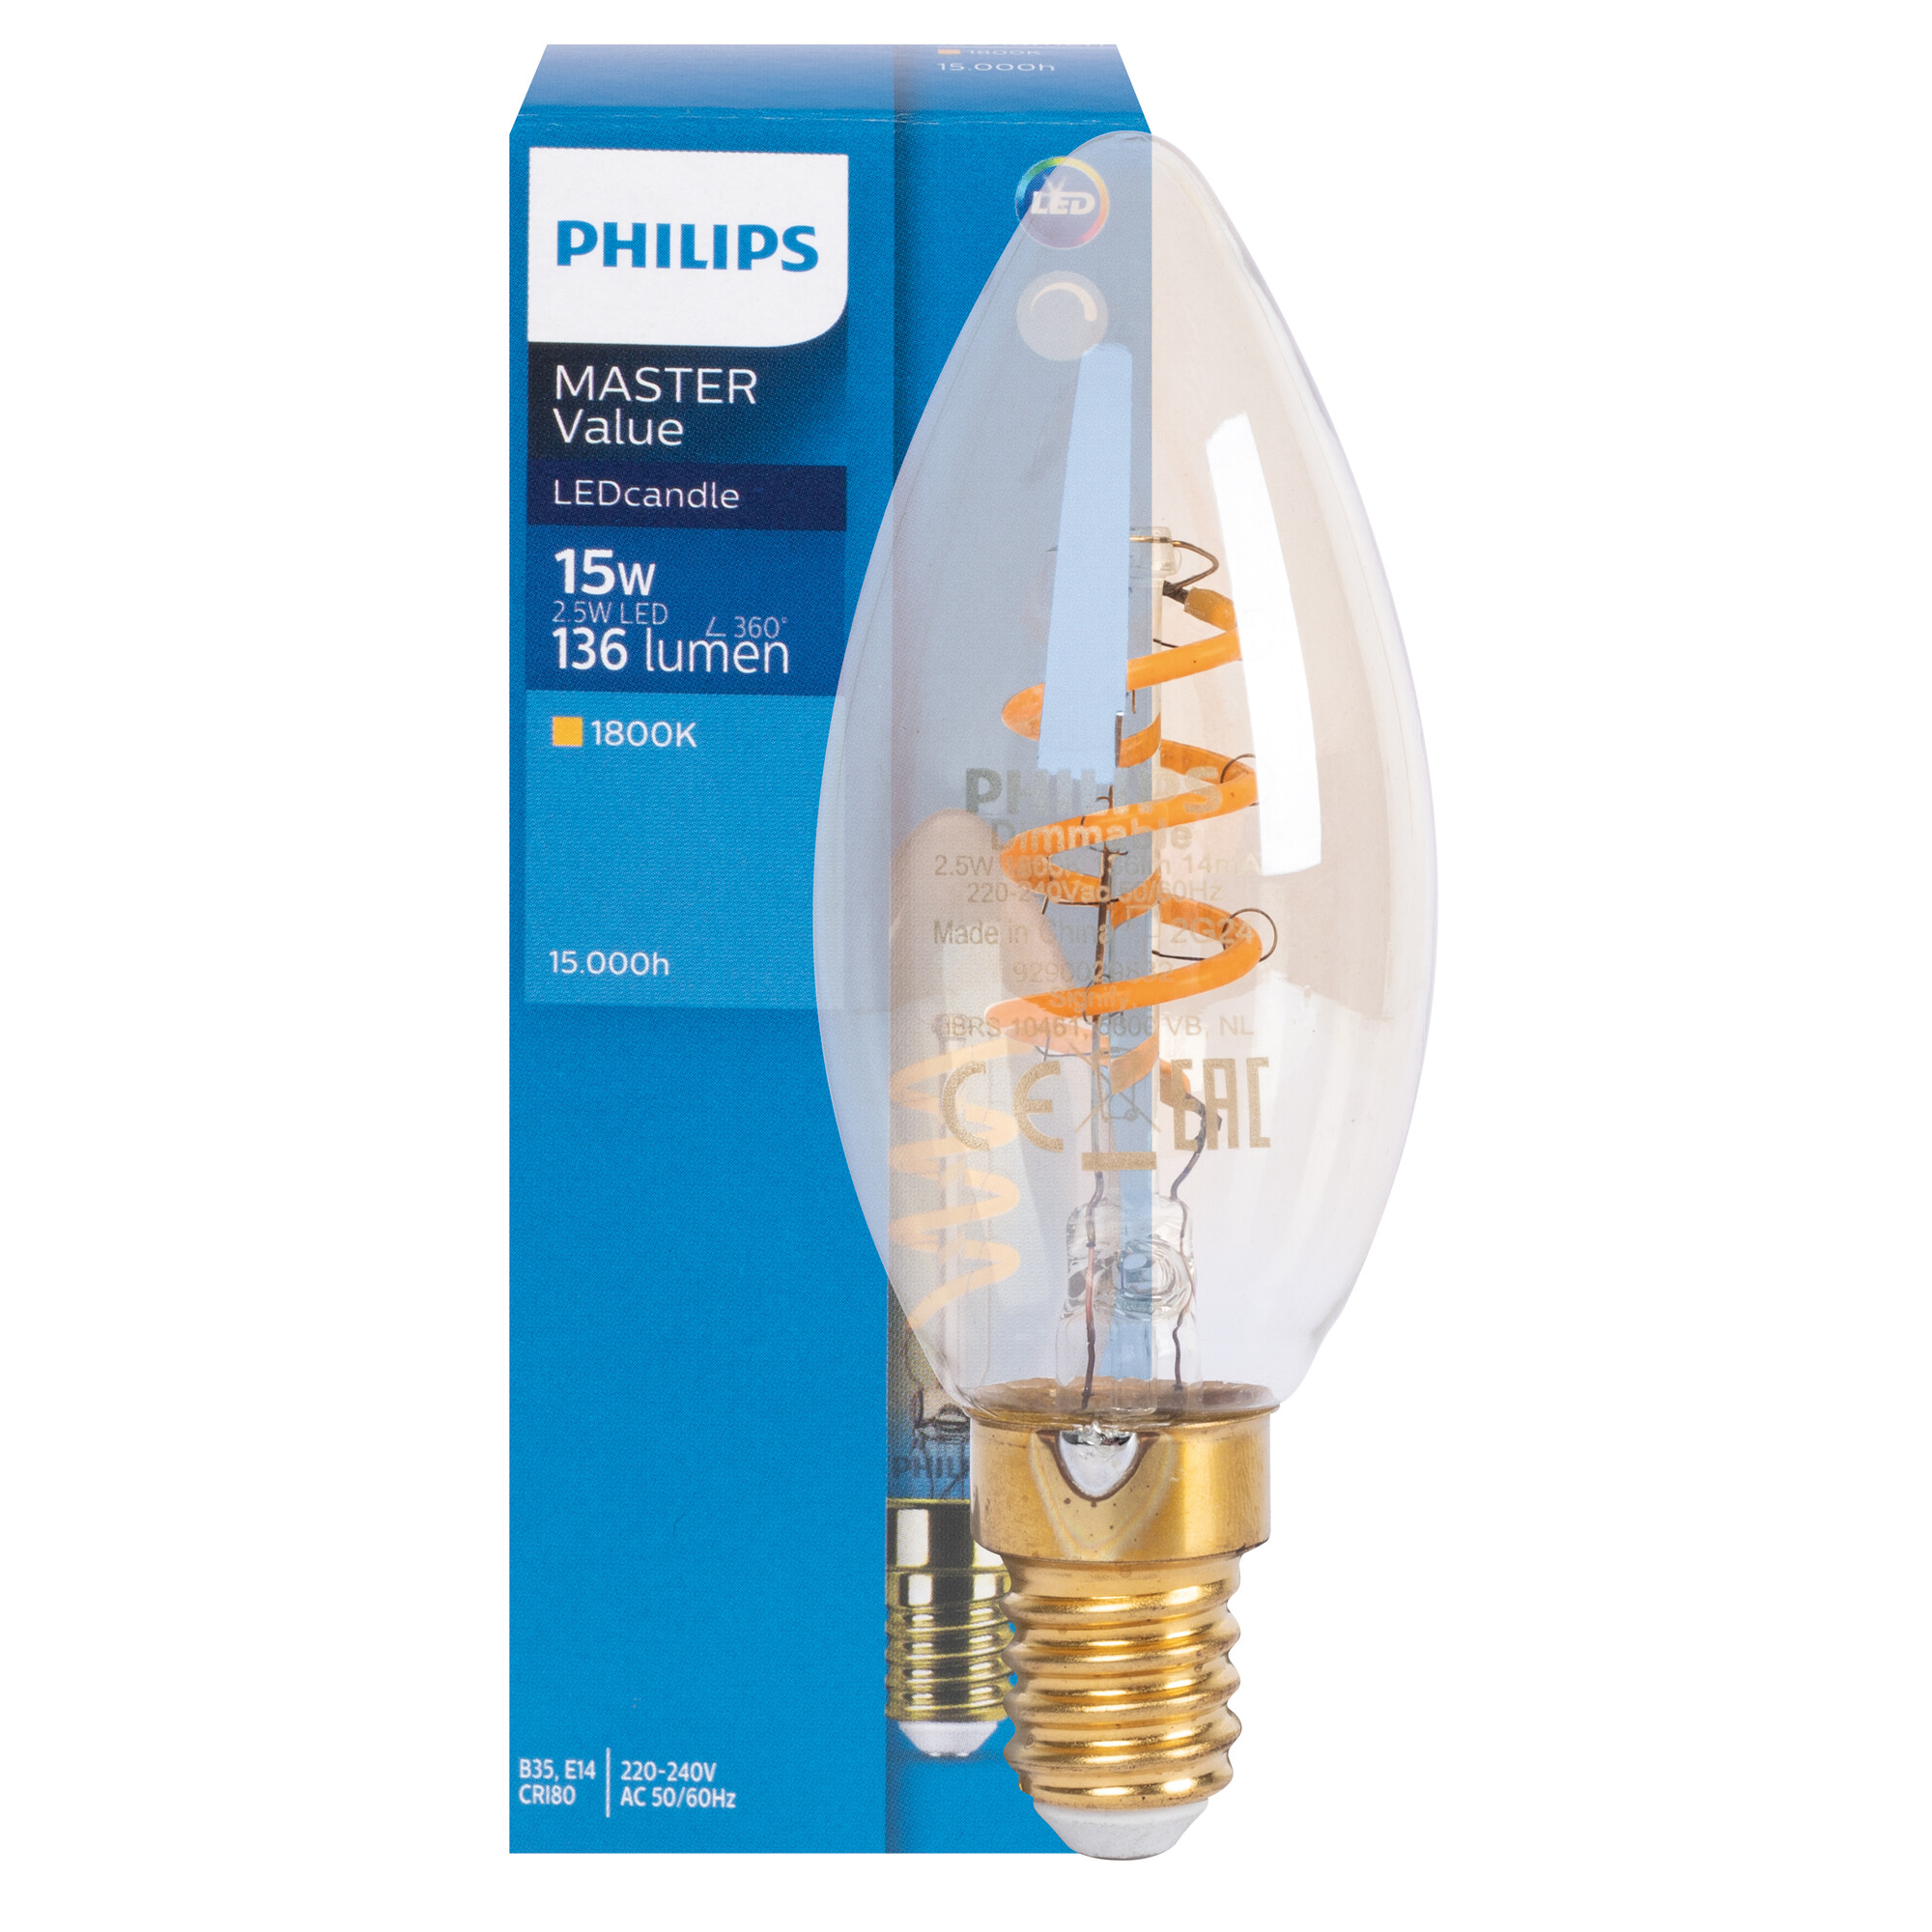 Spiral-LED-Lampe, Kerzen-Form, E14/2,5W, gold getönt, 136 lm, L 97, Ø 35 -  LED-Sonderform- & Deko-Lampen Leuchtmittel - Max Pferdekaemper GmbH & Co. KG